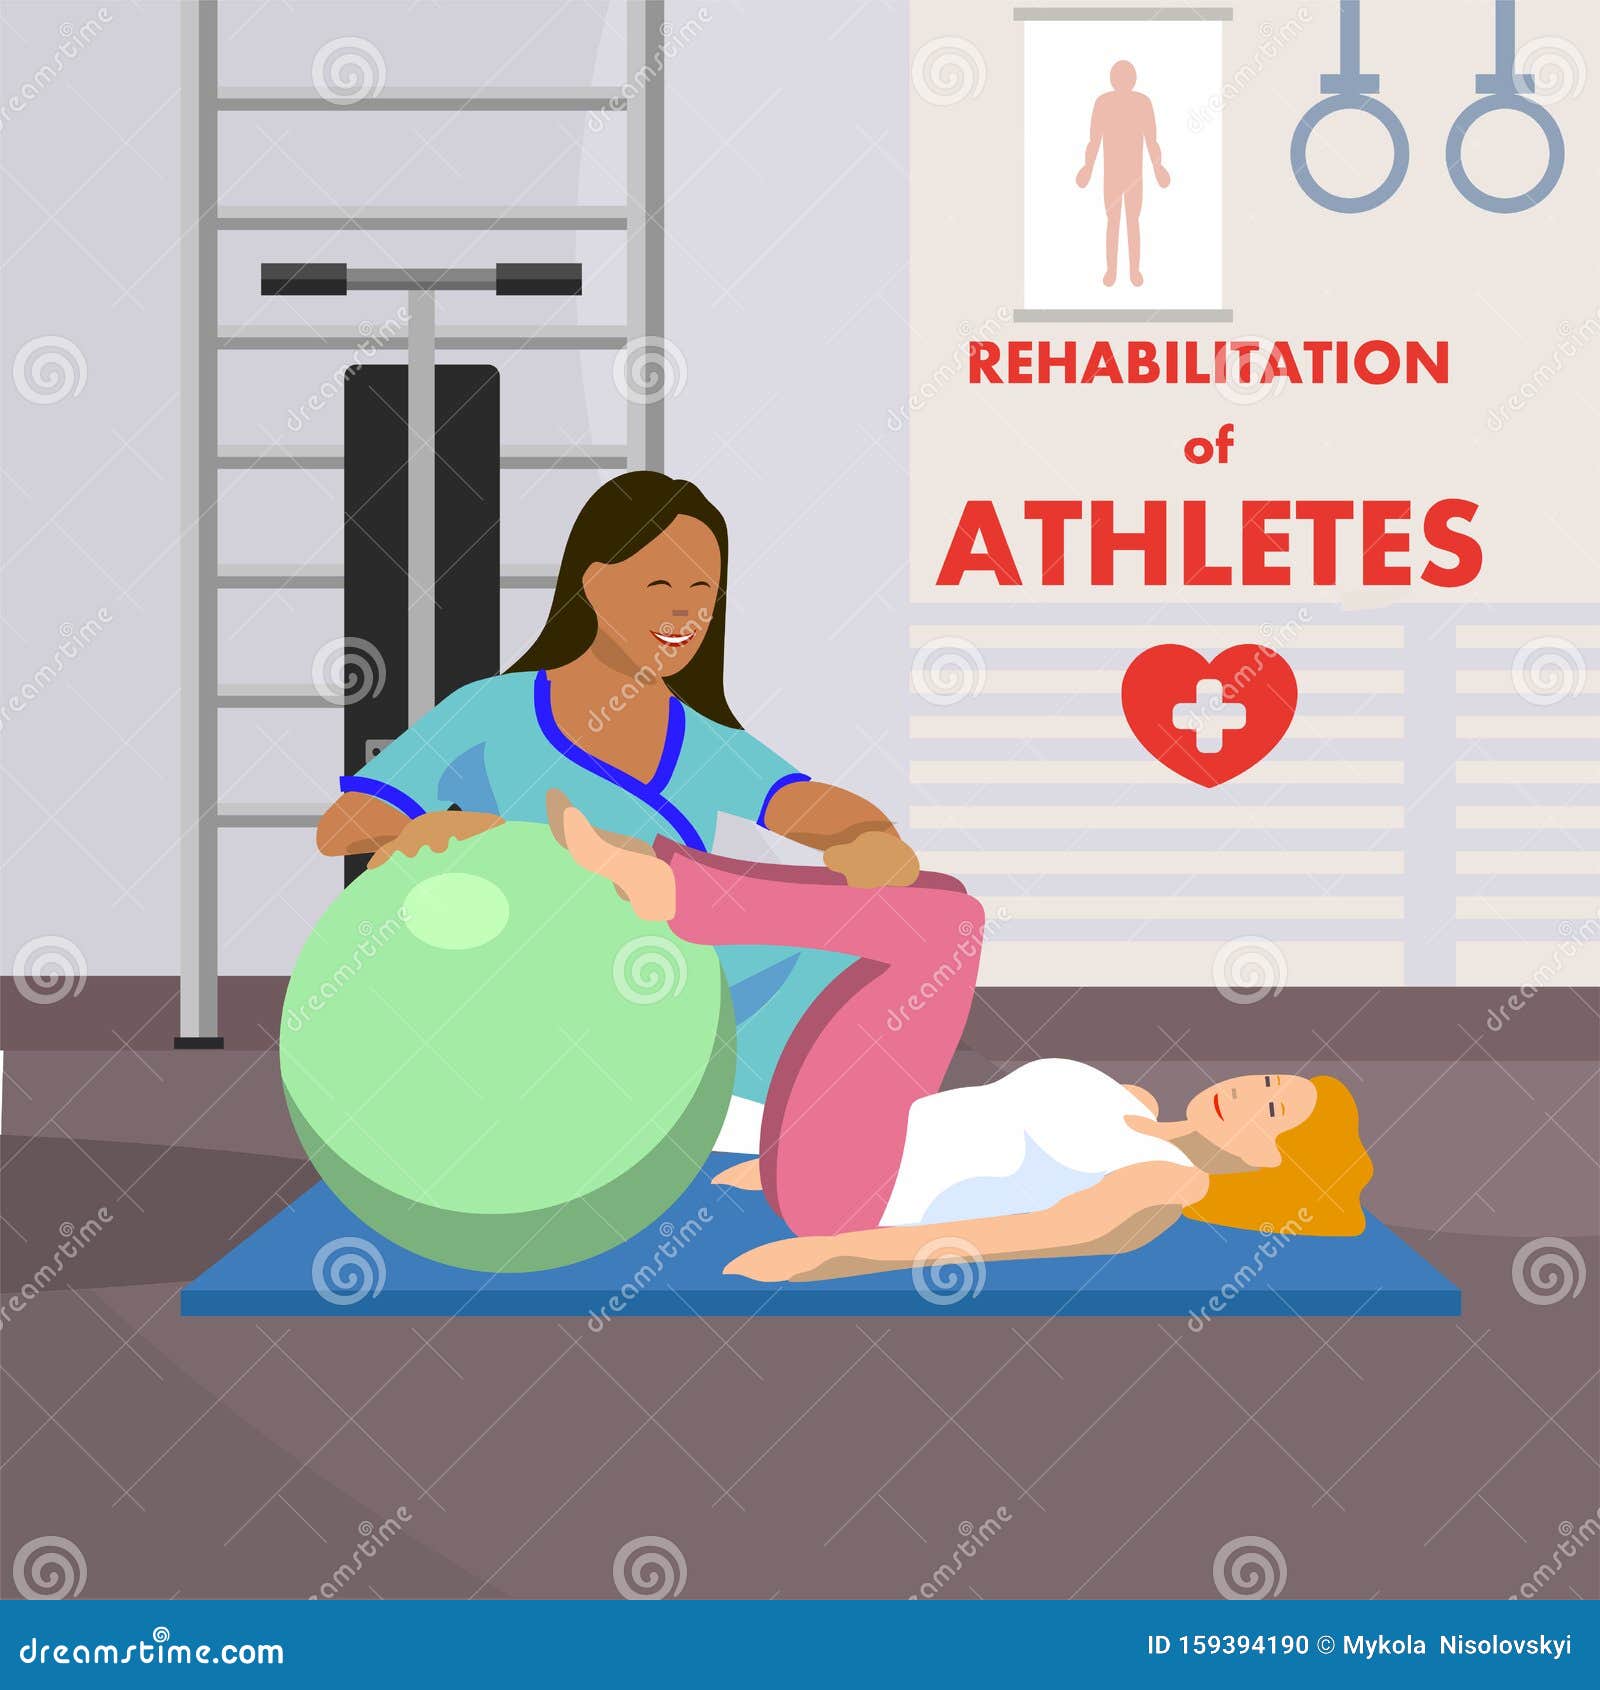 athletes rehabilitation at convalescent center ads